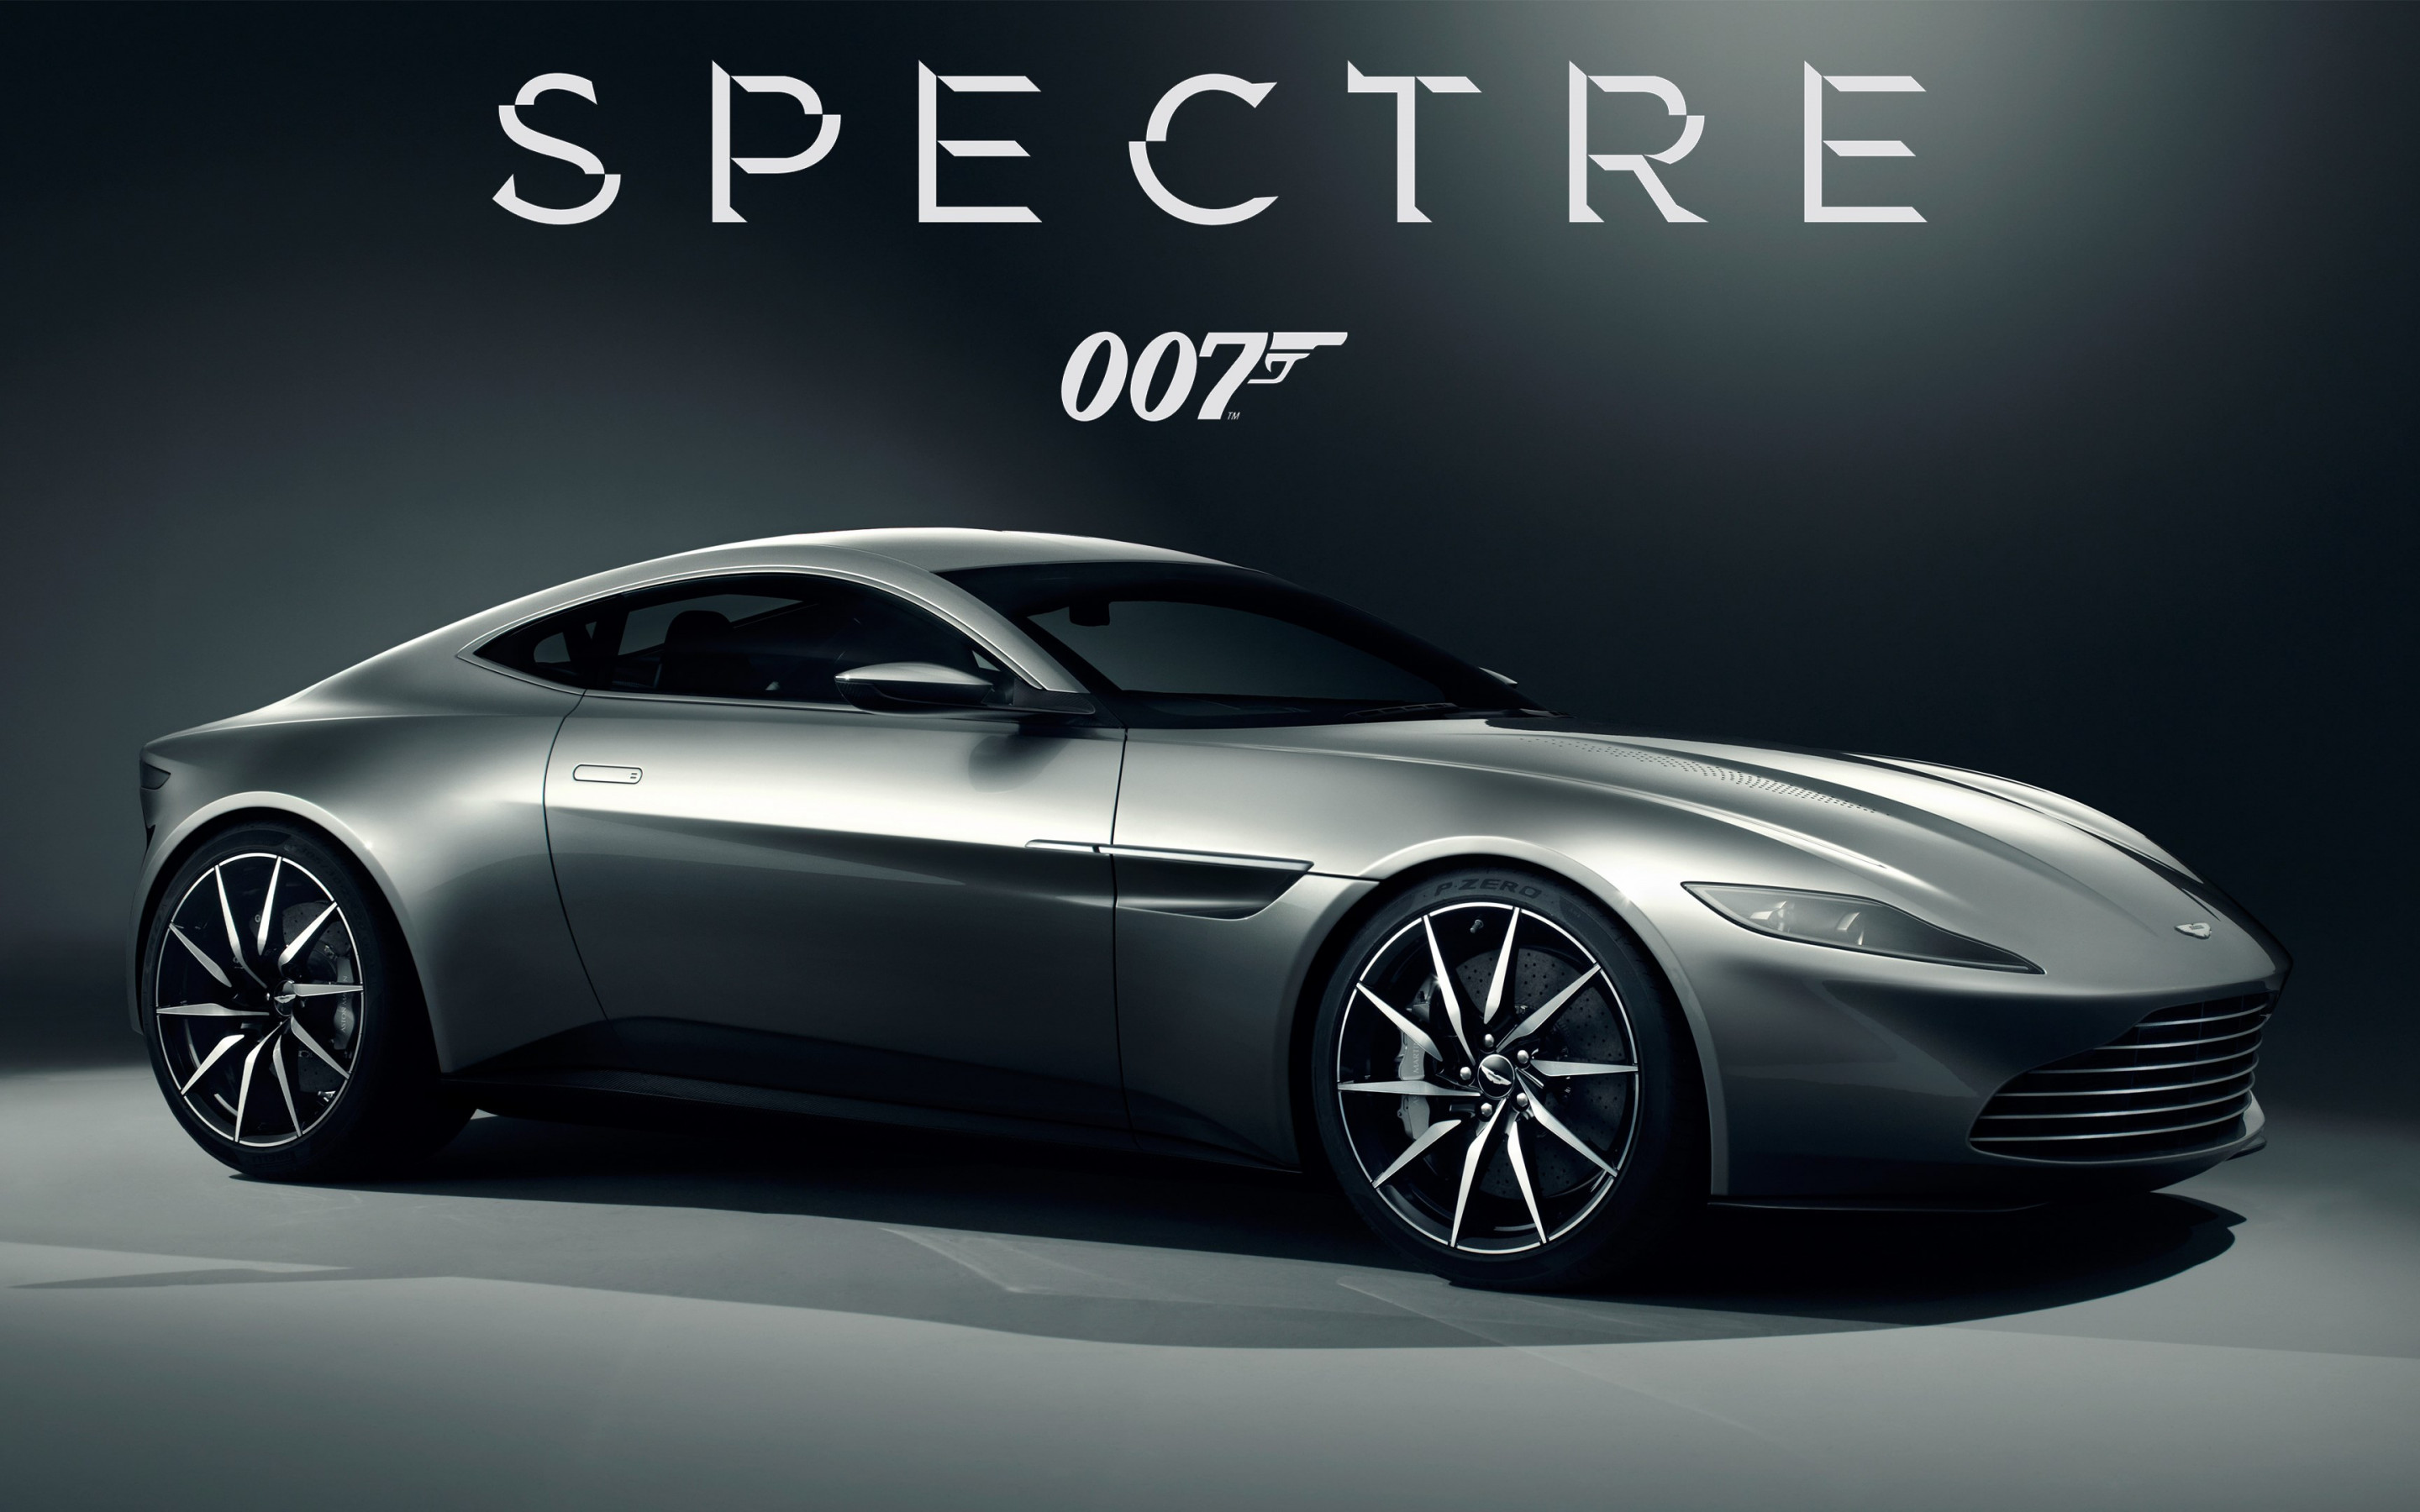 Aston Martin DB10 007 Spectre car wallpaper 2880x1800